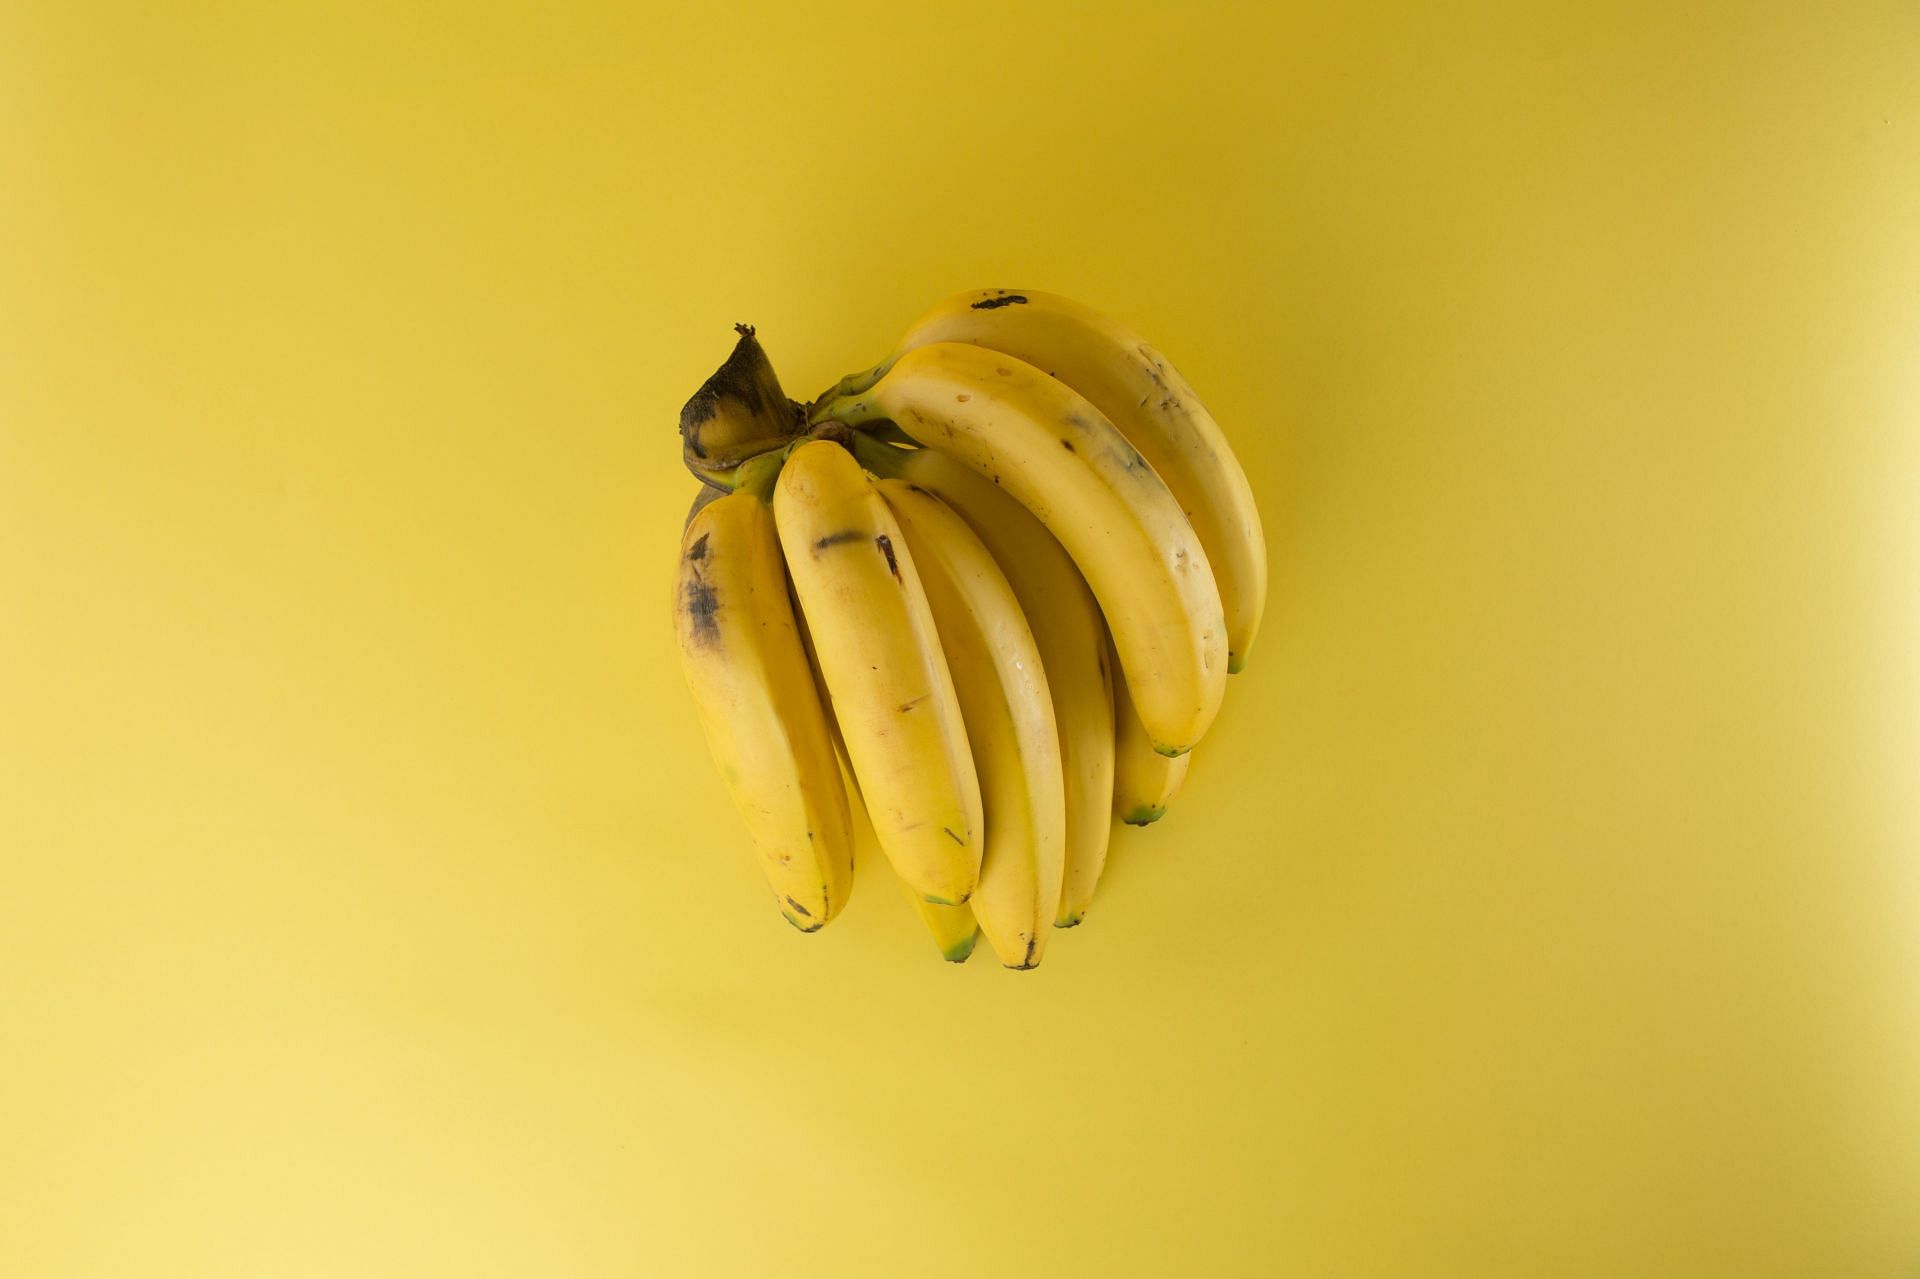 Bananas can be consumed before workout for energy. (Image via Pexels/Juan Salamanca)